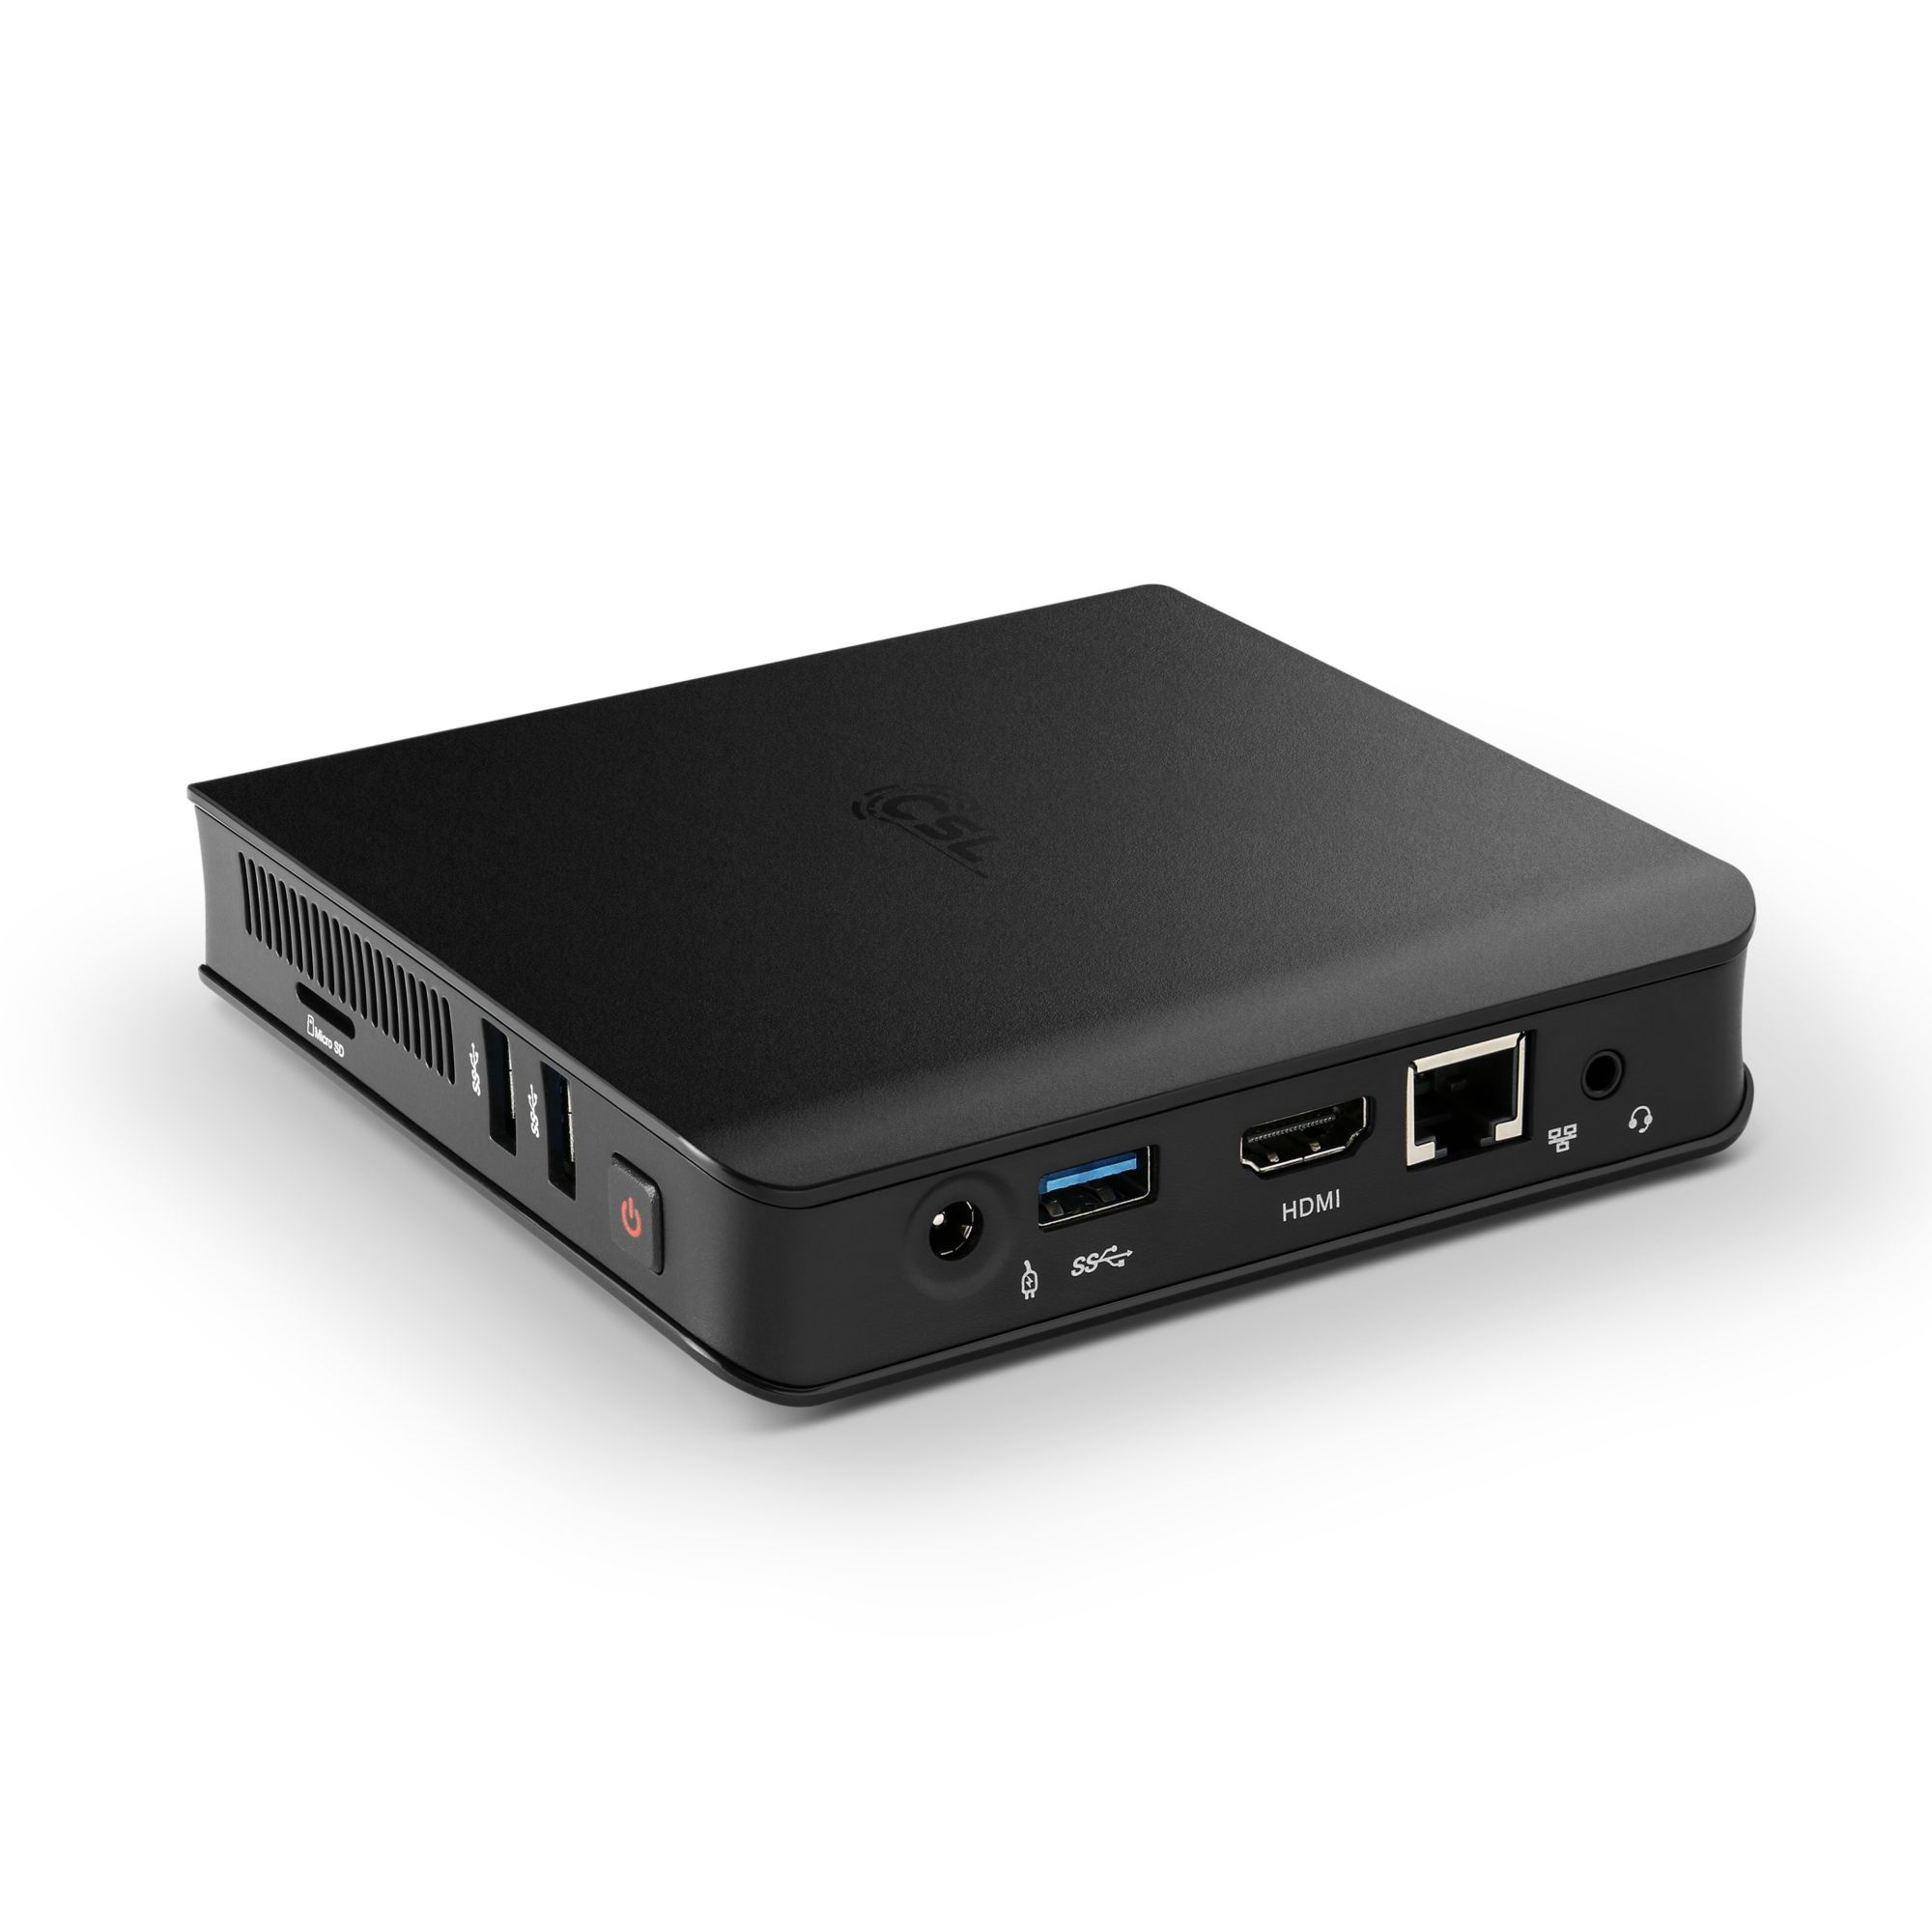 CSL Narrow Box Ultra ++ PC HD Mini v4 Cyberport Celeron Win10 N4120 4GB/128GB eMMC Compact